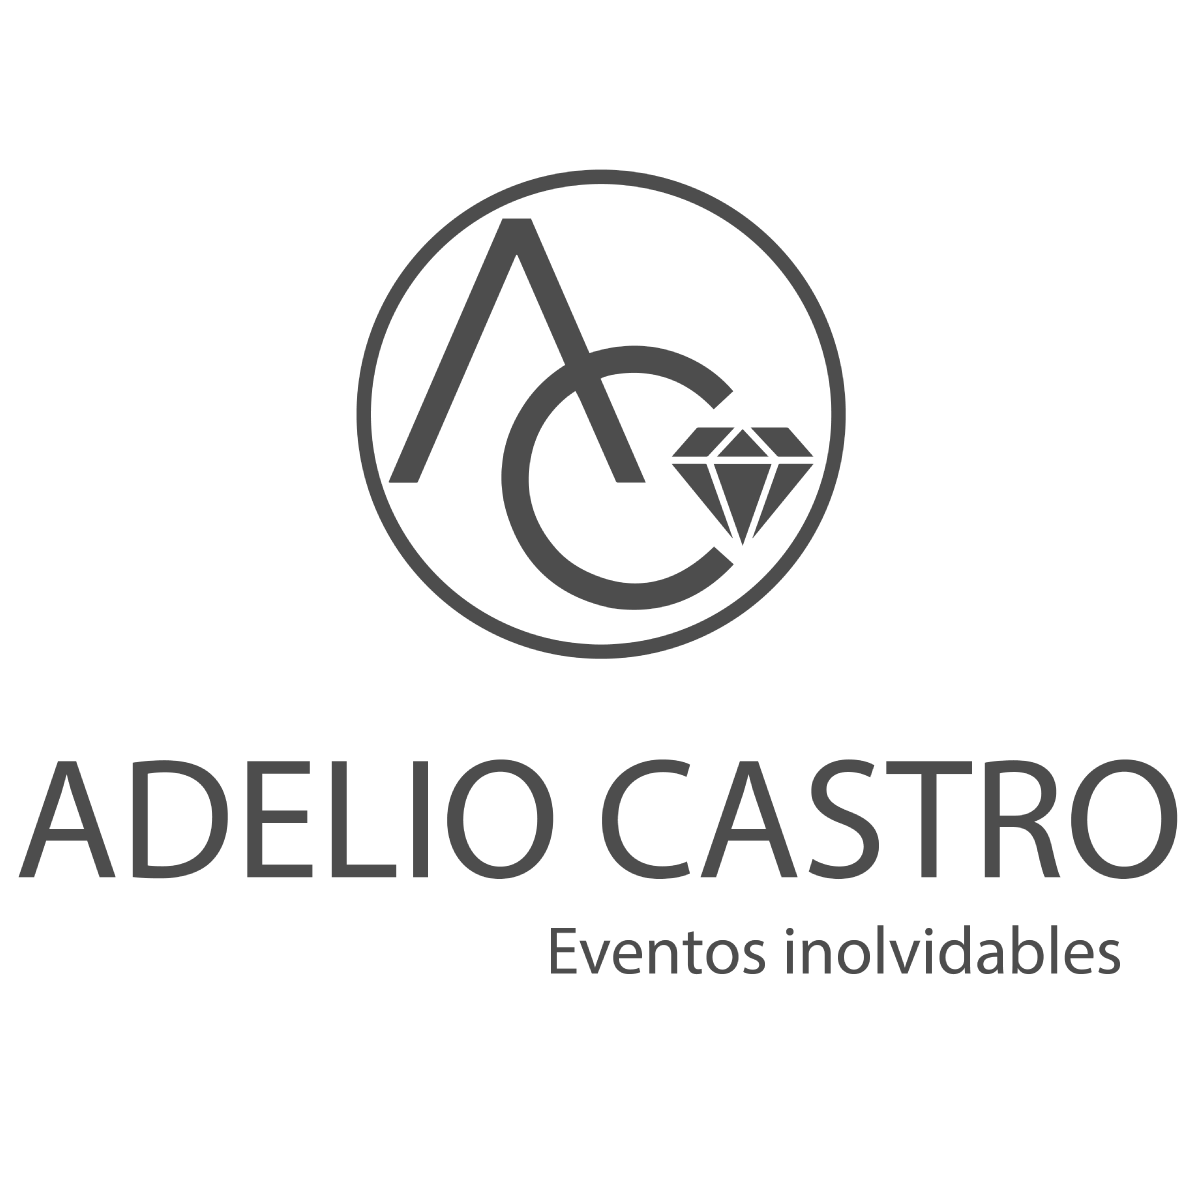 ADELIO CASTRO